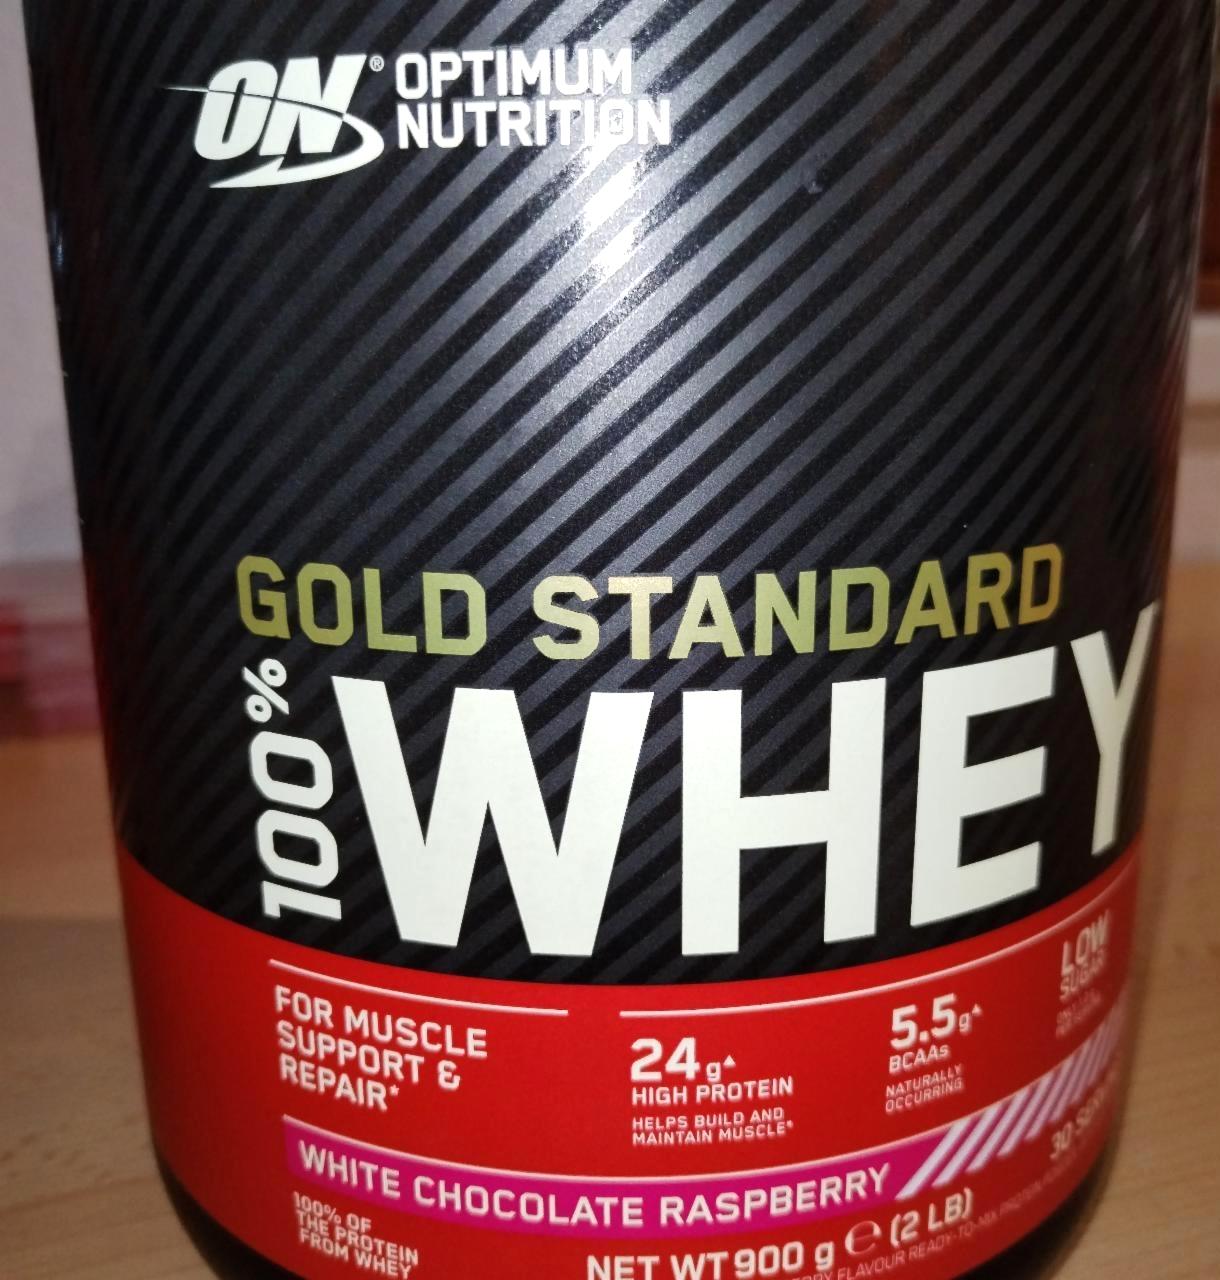 Képek - Gold standard whey White chocolate raspberry Optimum nutrition